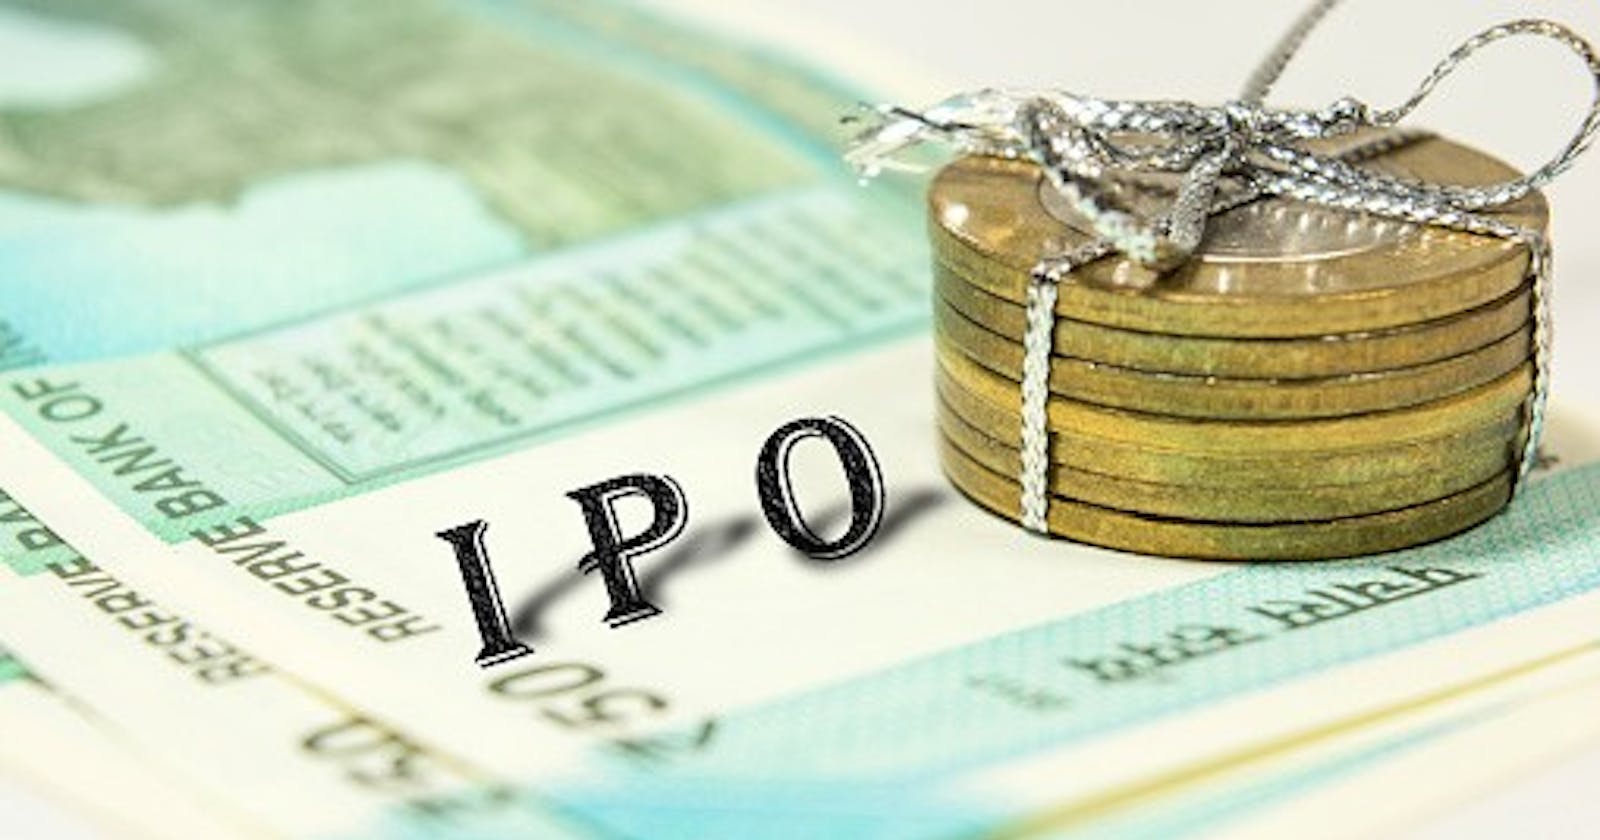 Mamaearth’s IPO value raises concerns